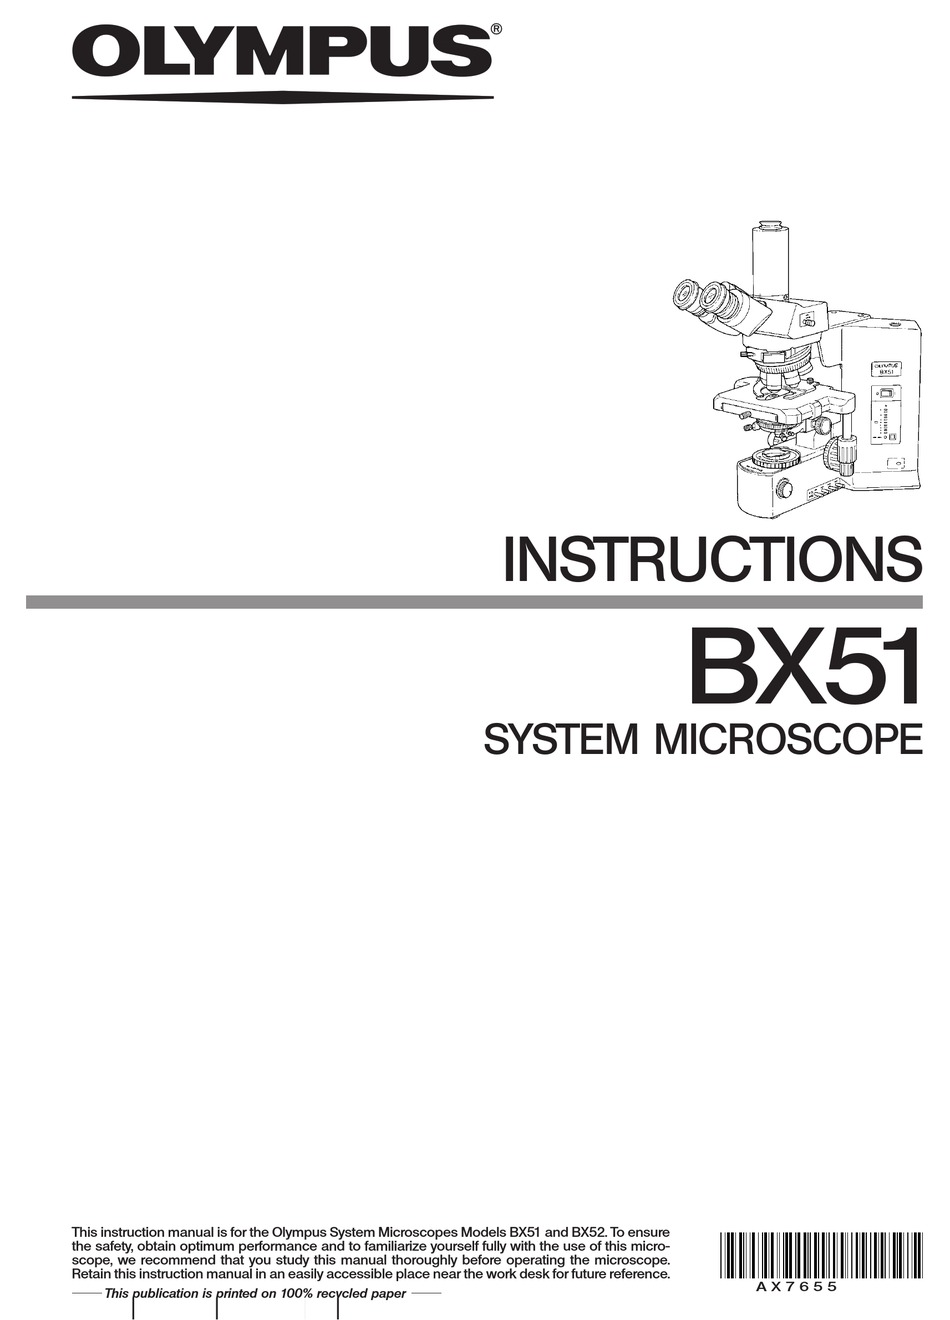 OLYMPUS BX51 INSTRUCTIONS MANUAL Pdf Download | ManualsLib